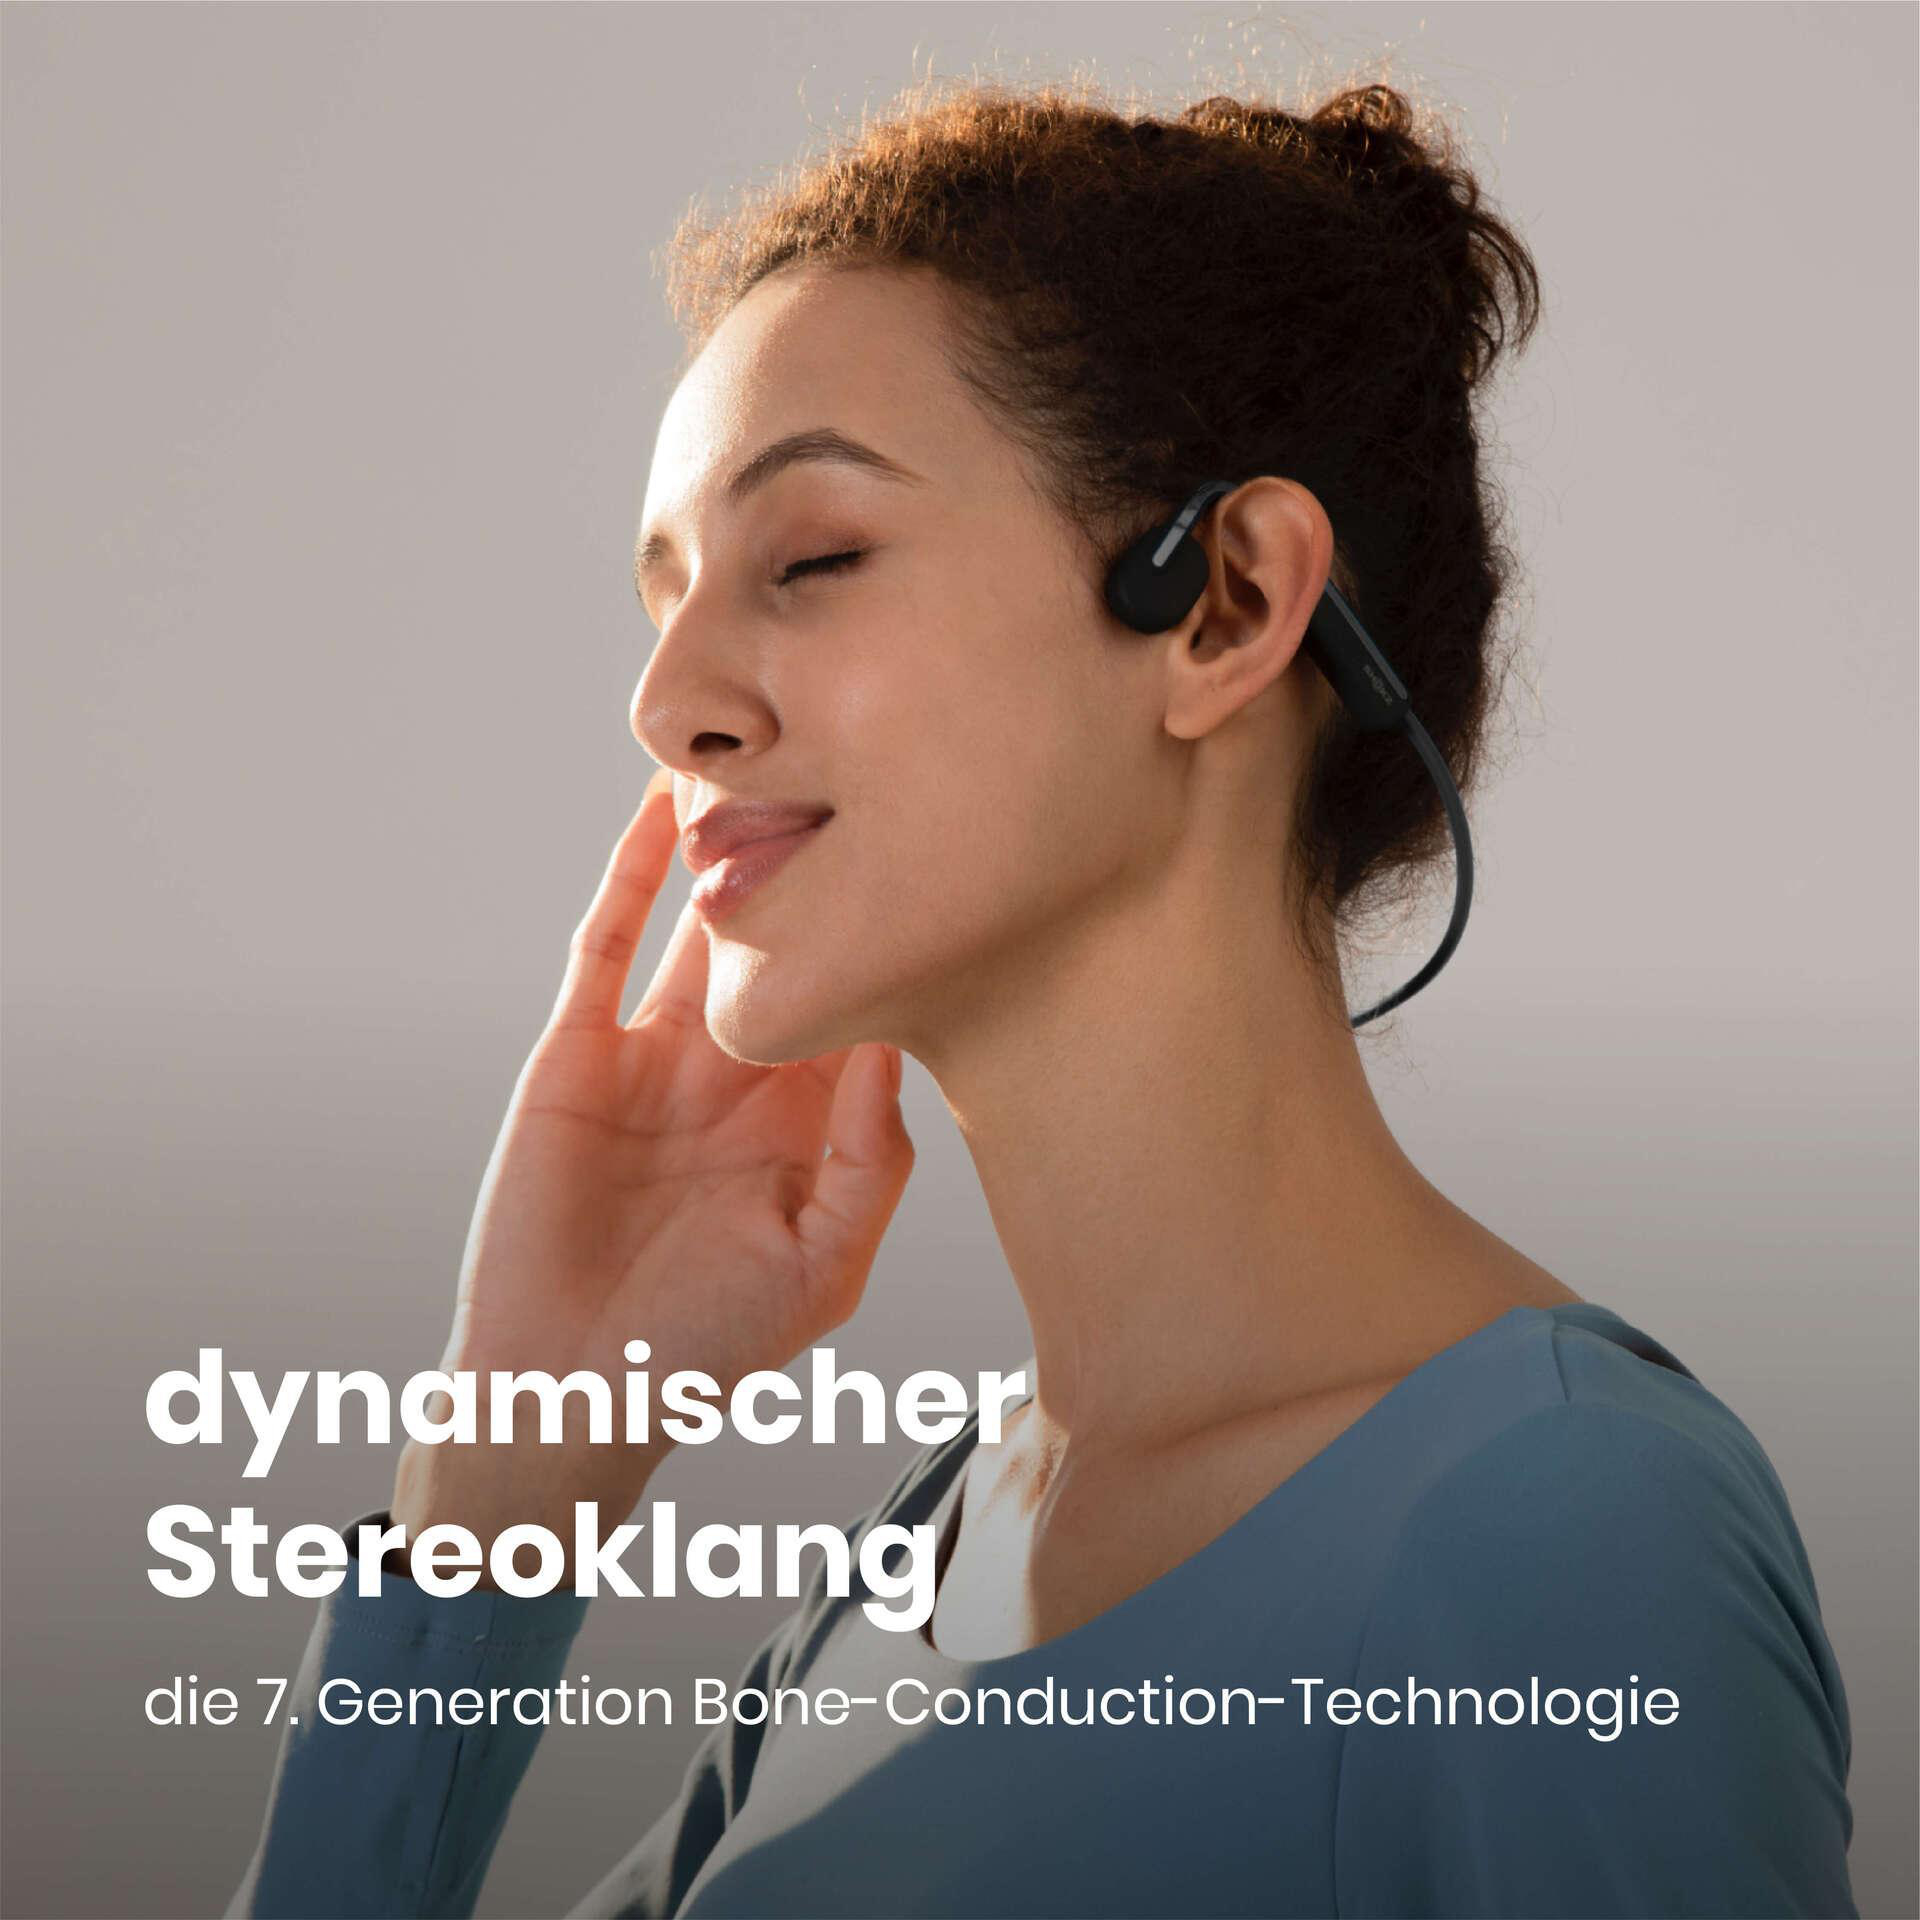 Grau Kopfhörer Bluetooth Open-ear SHOKZ OpenMove,